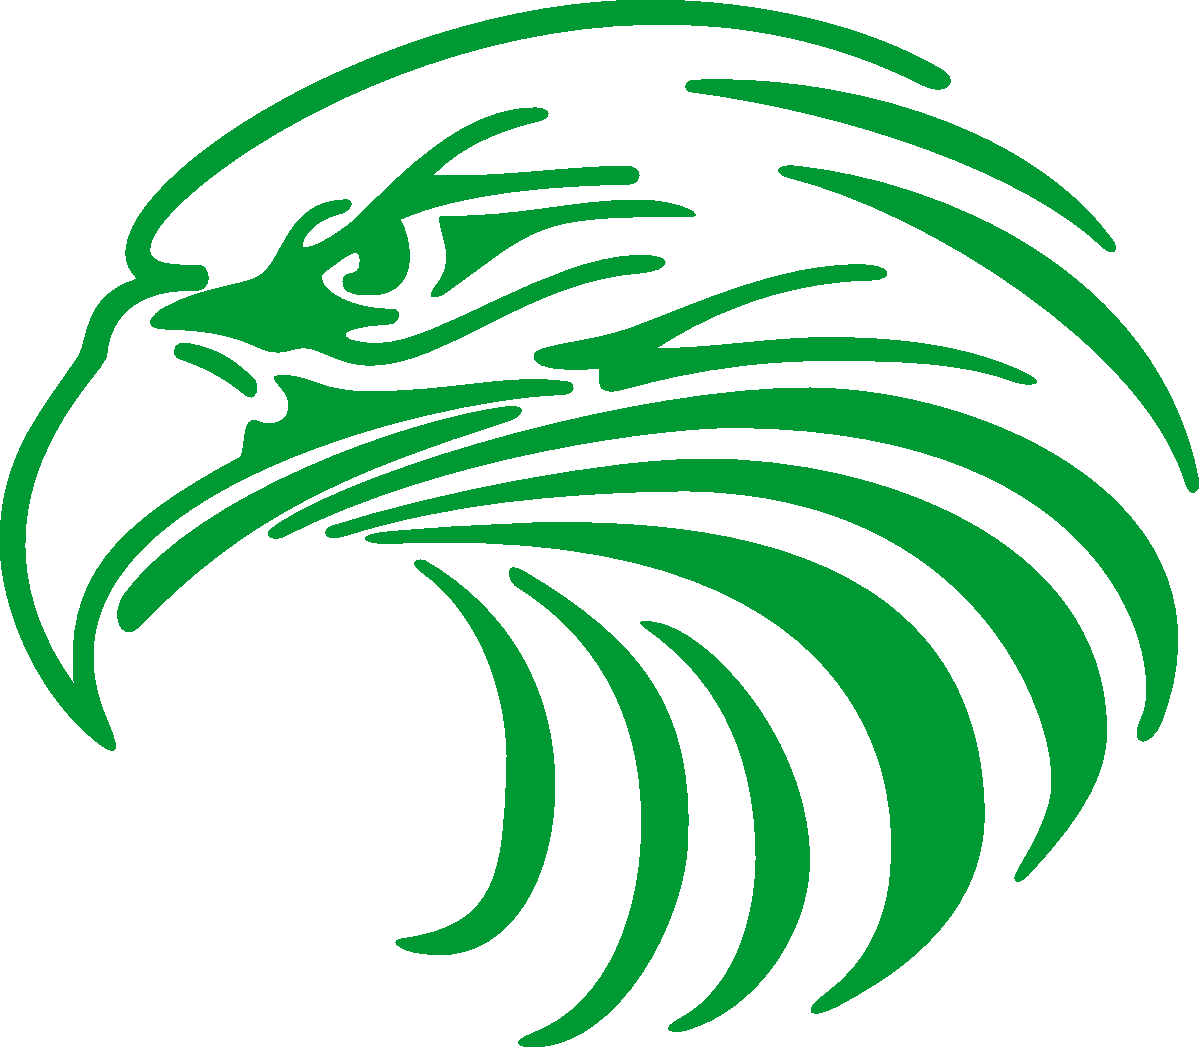 Eagles icon